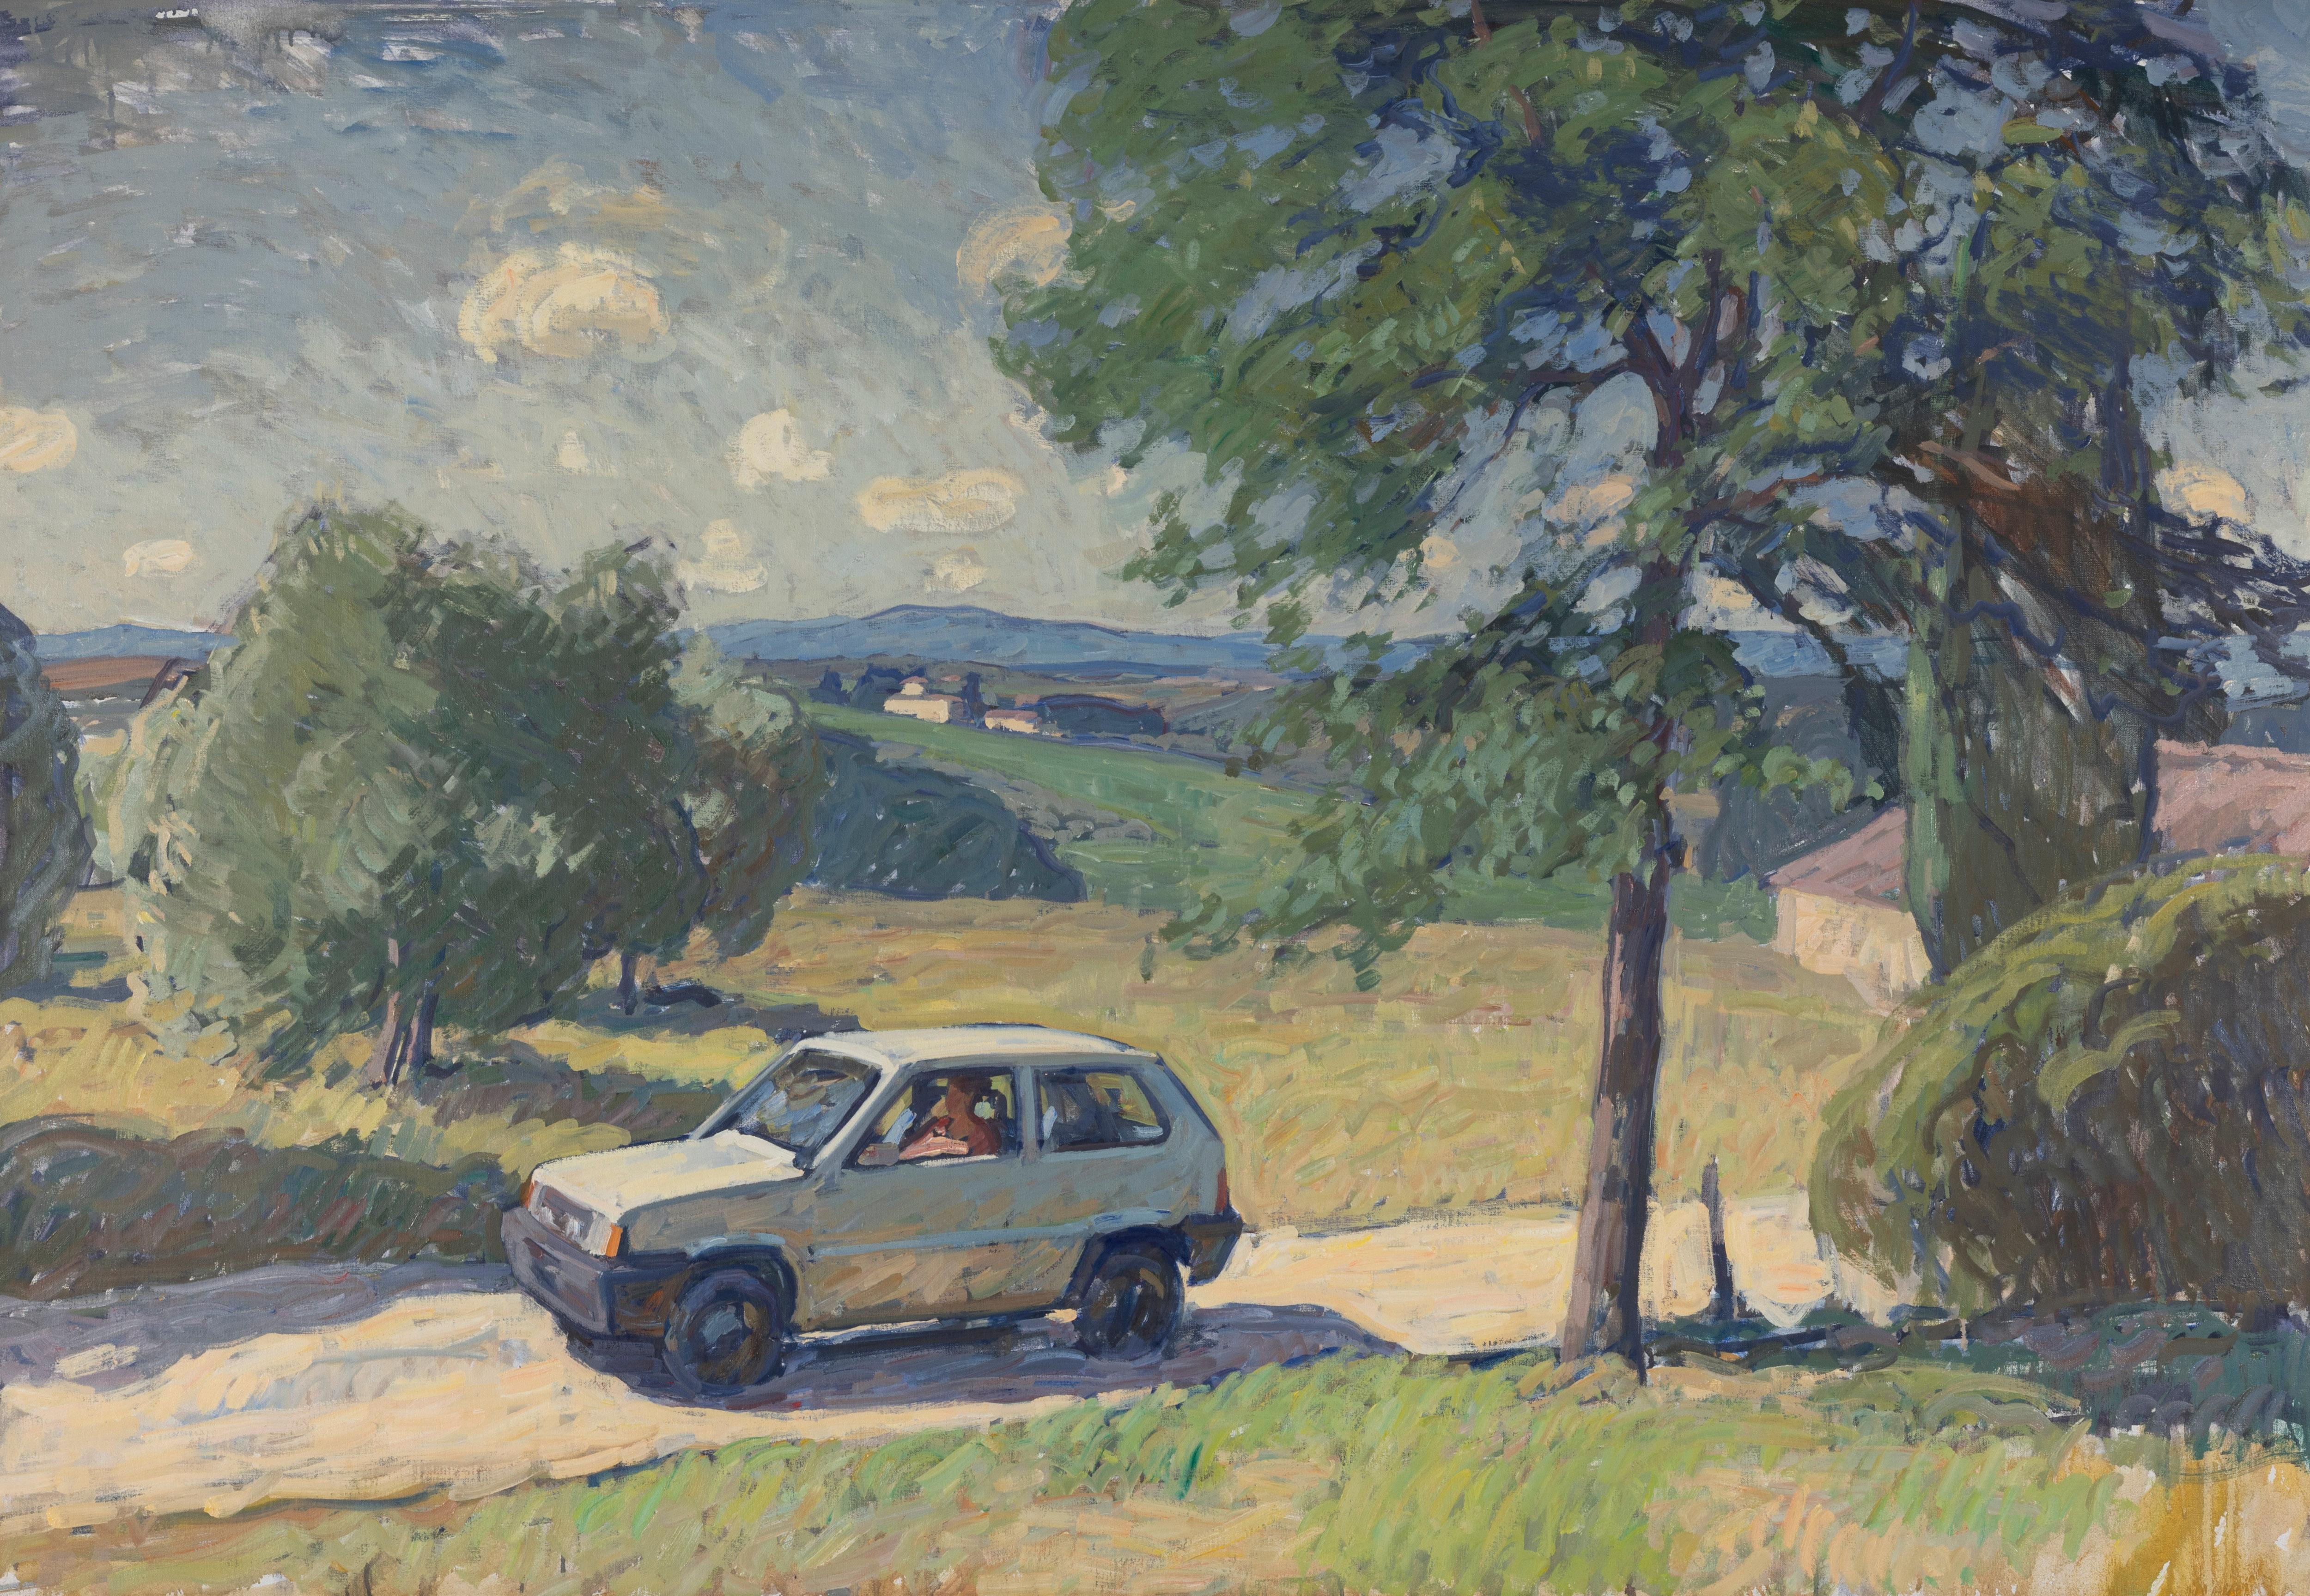 Ben Fenske Landscape Painting - "Summer" Neo Impressionist landscape of Fiat driving along Tuscan countryside